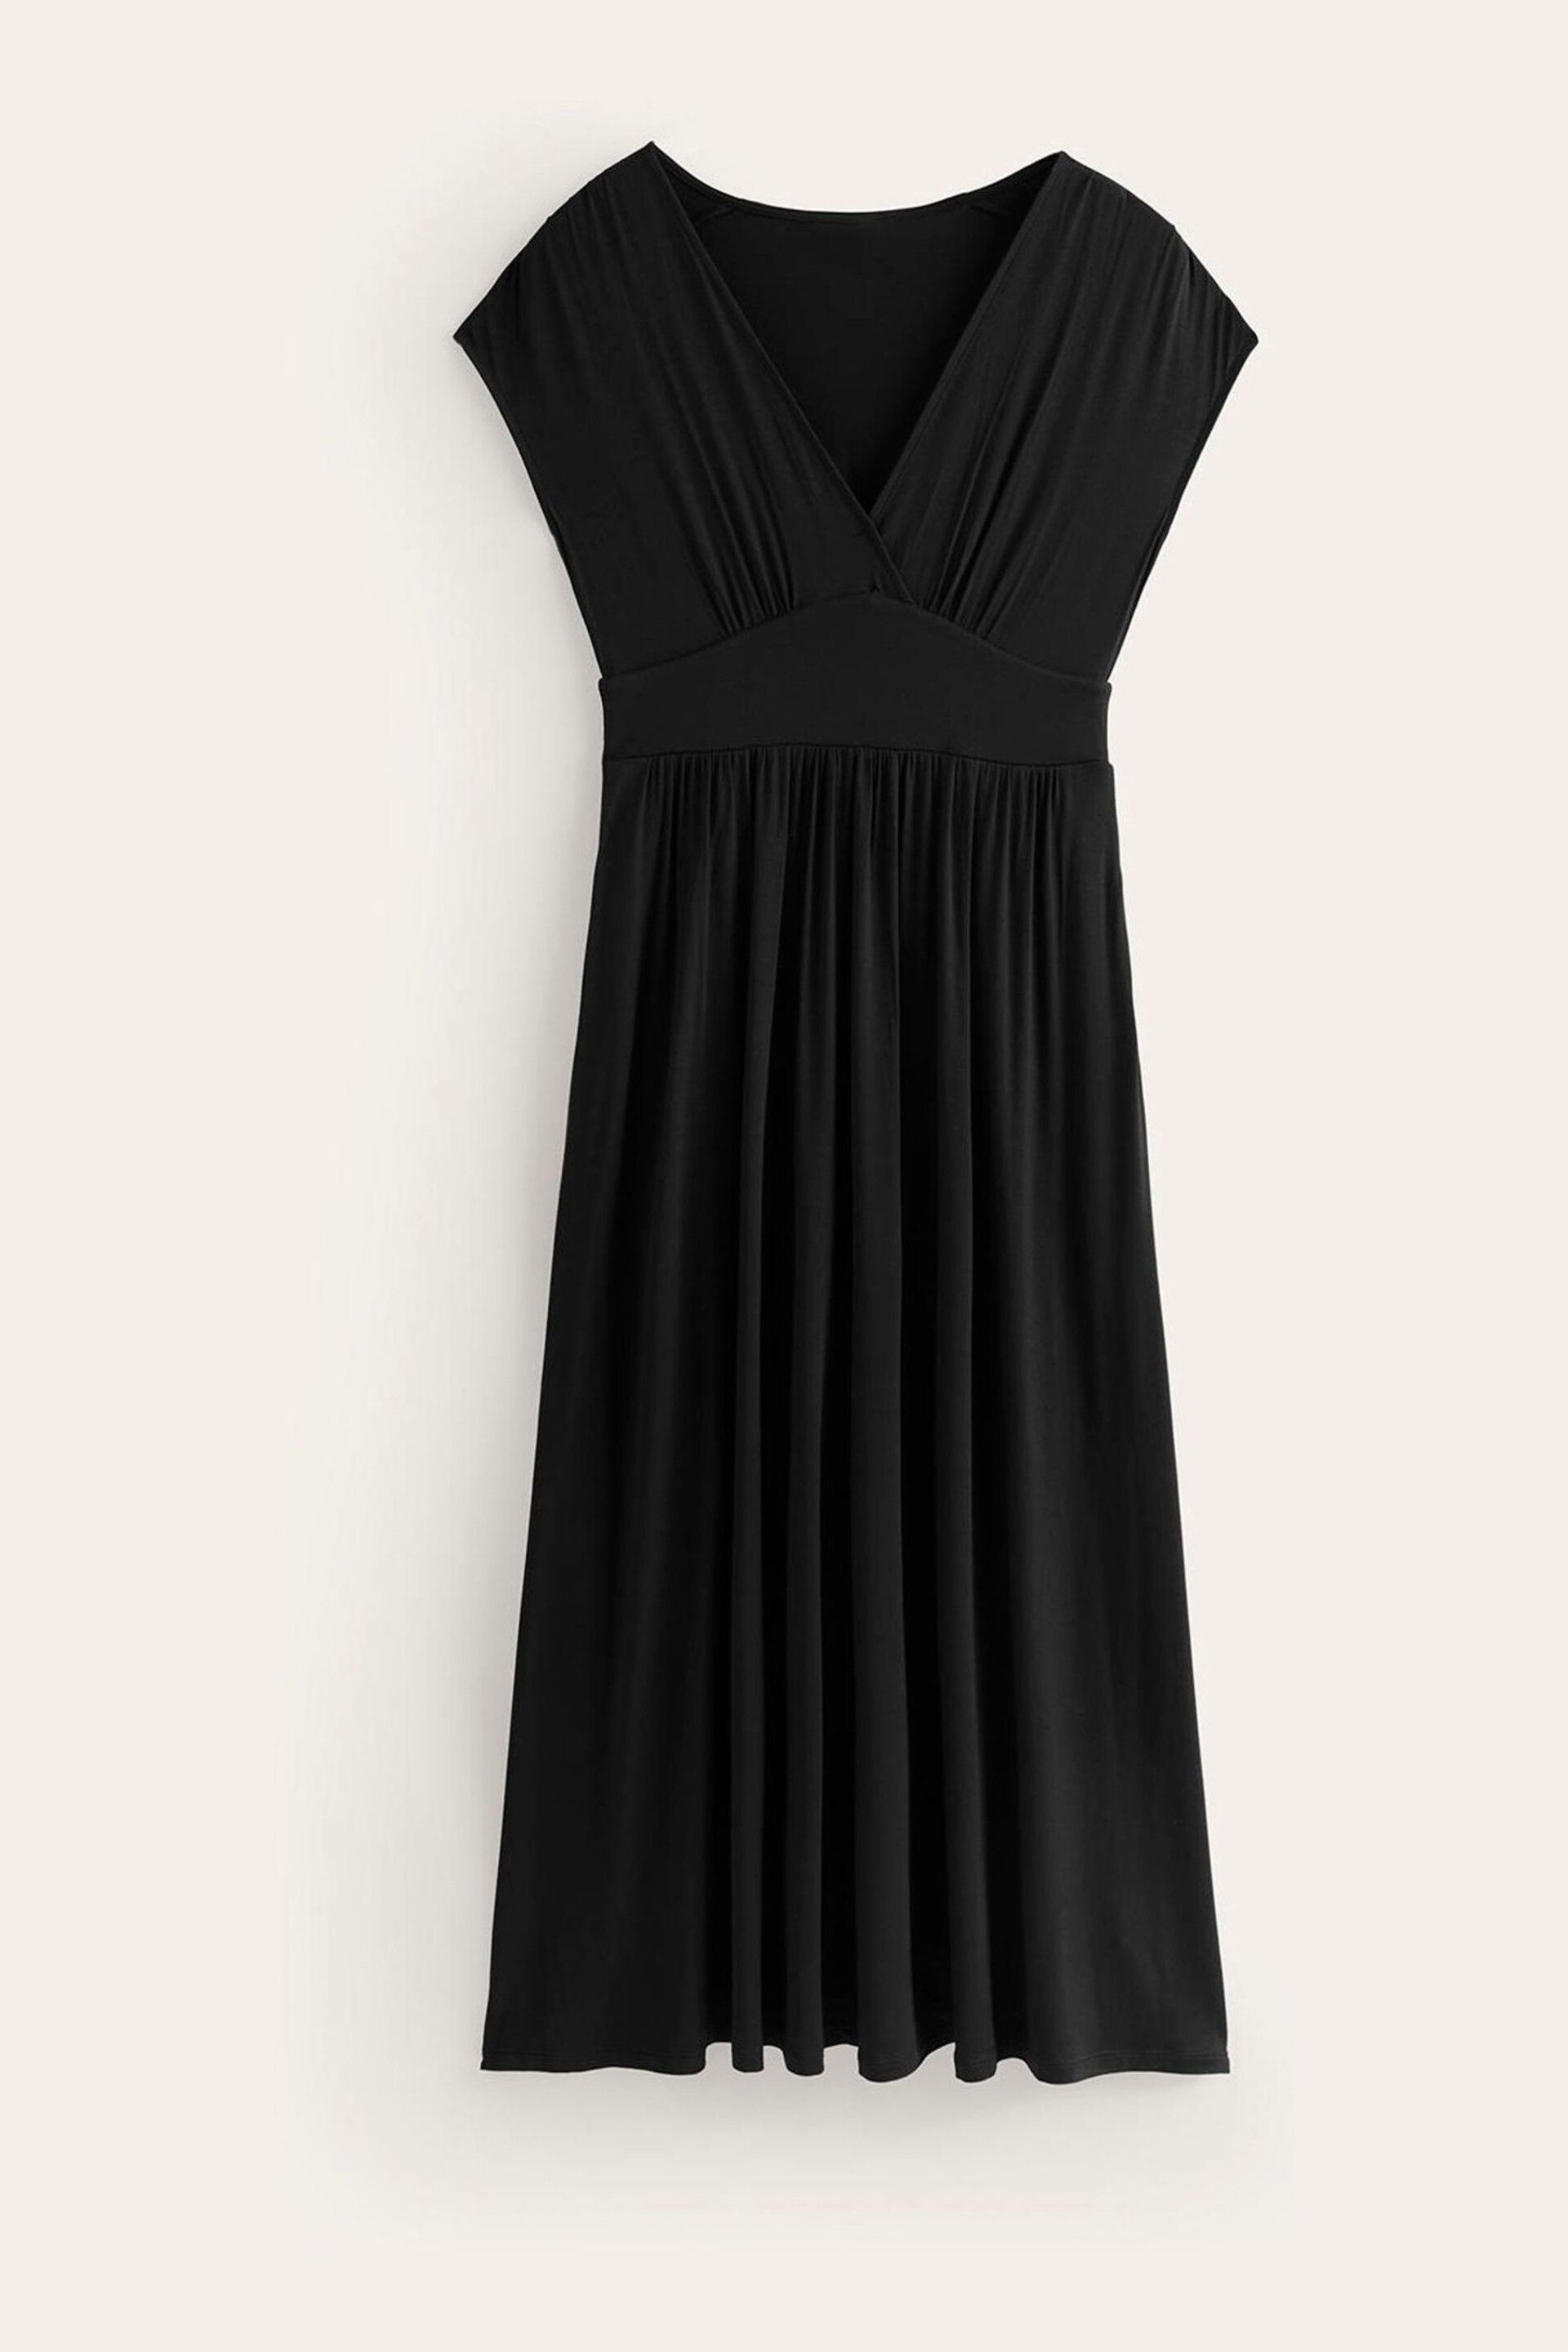 Boden Black Vanessa Wrap Jersey Maxi Dress - Image 5 of 5